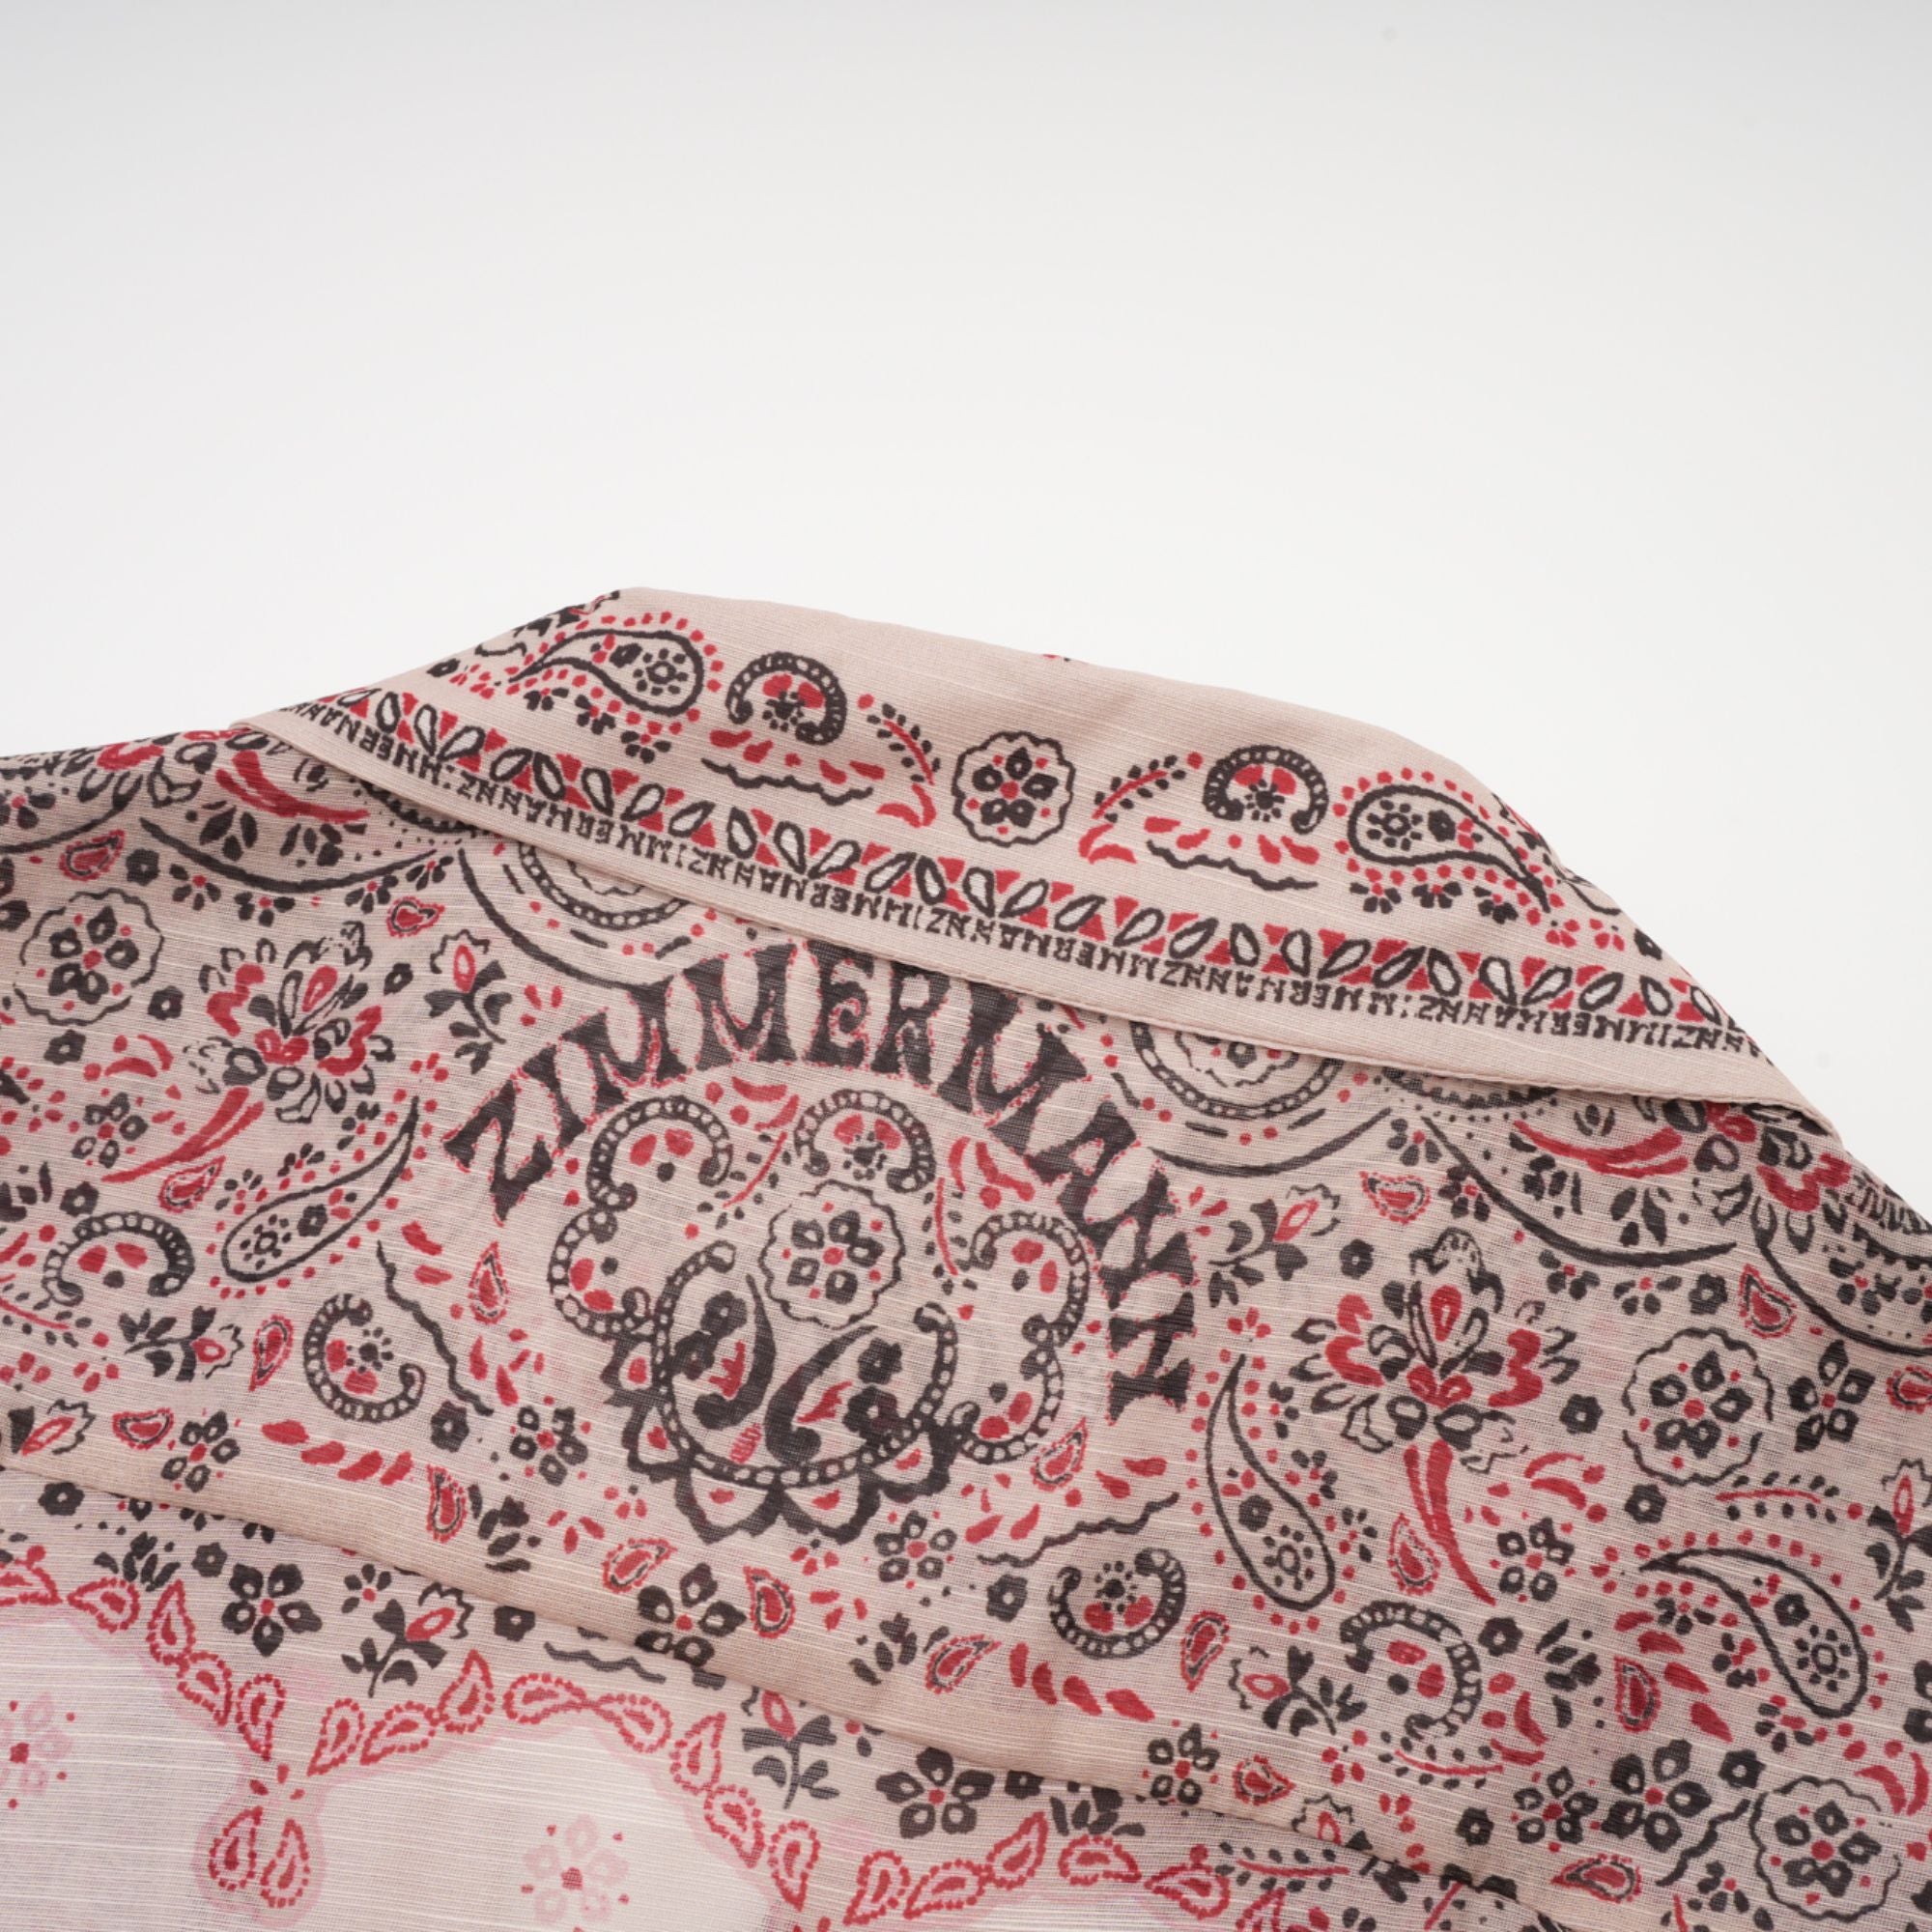 Sabine high-waisted pattern-printed midi dress